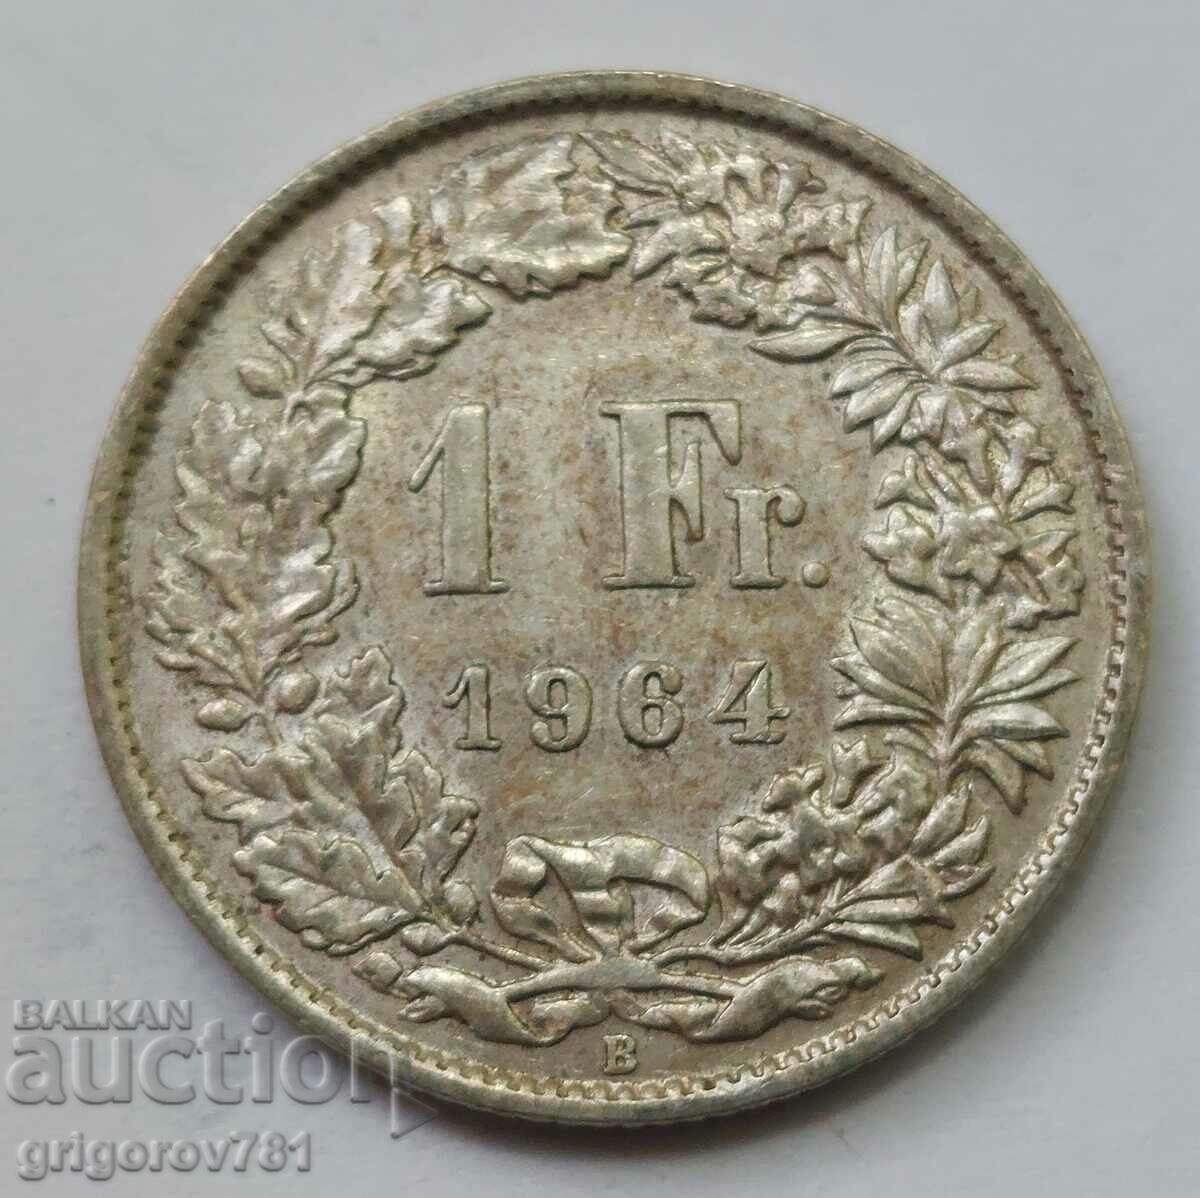 1 Franc Silver Switzerland 1964 B - Silver Coin #37